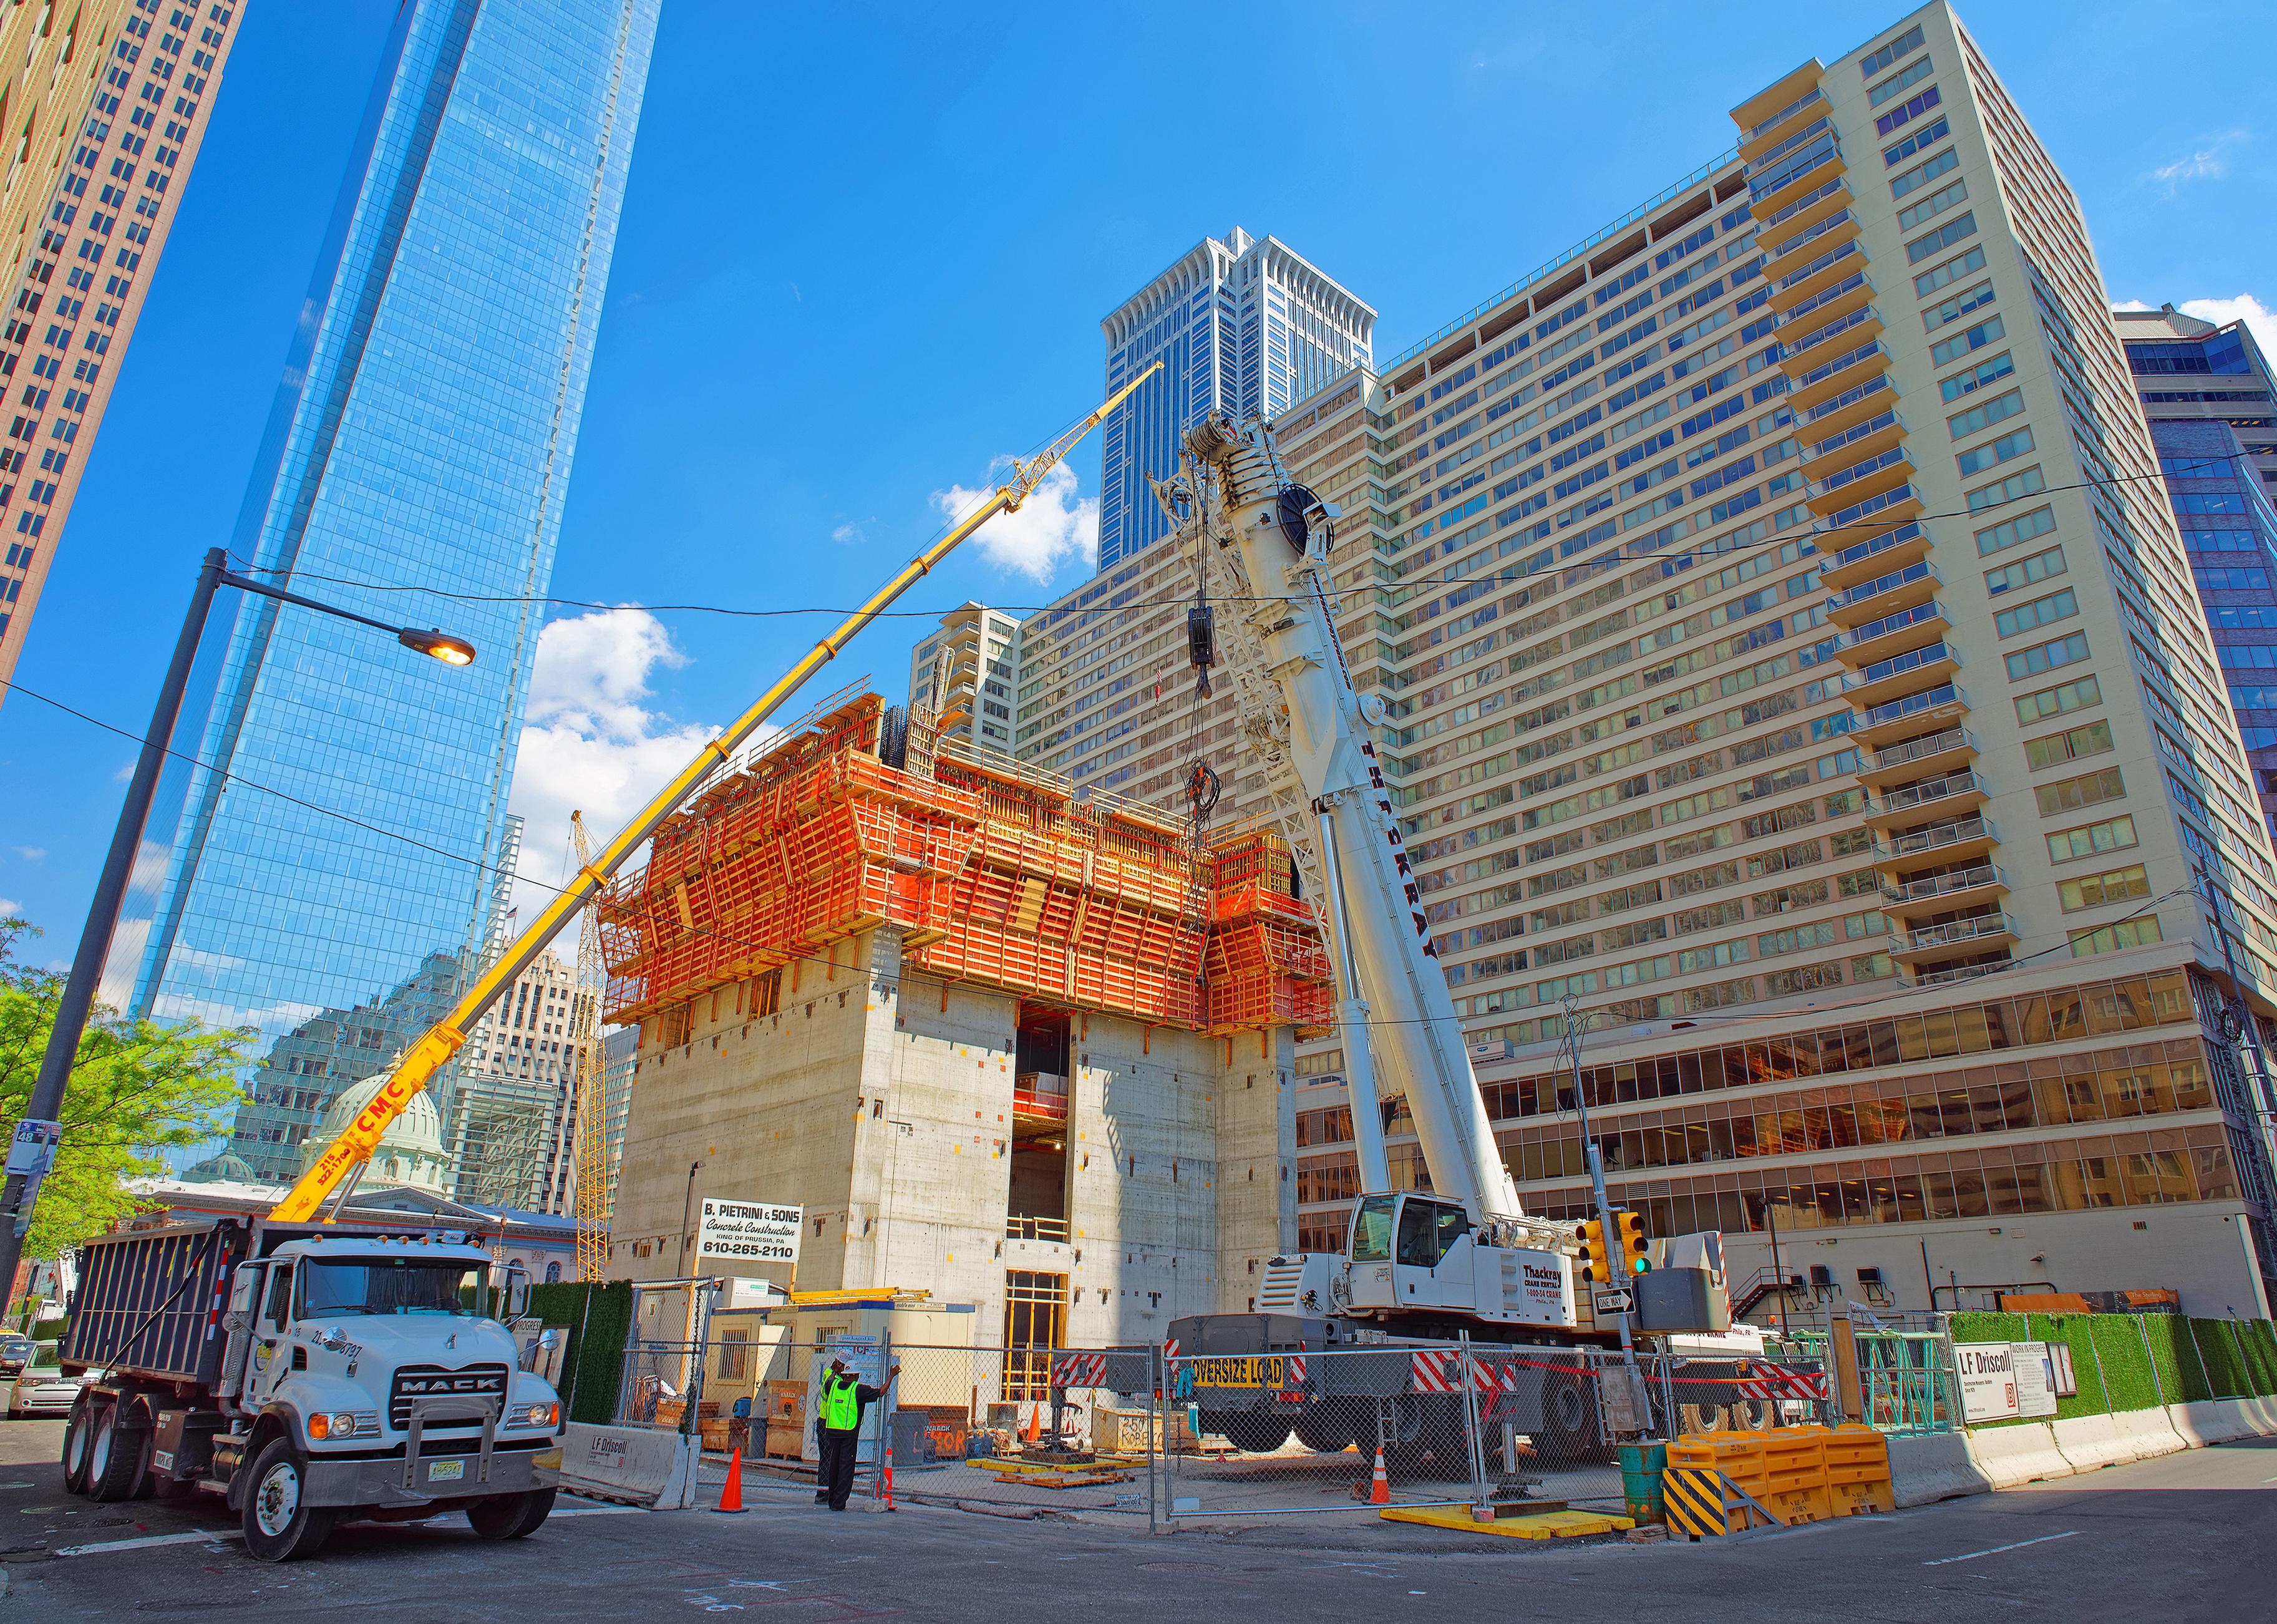 Construction in the City Center in Philadelphia.